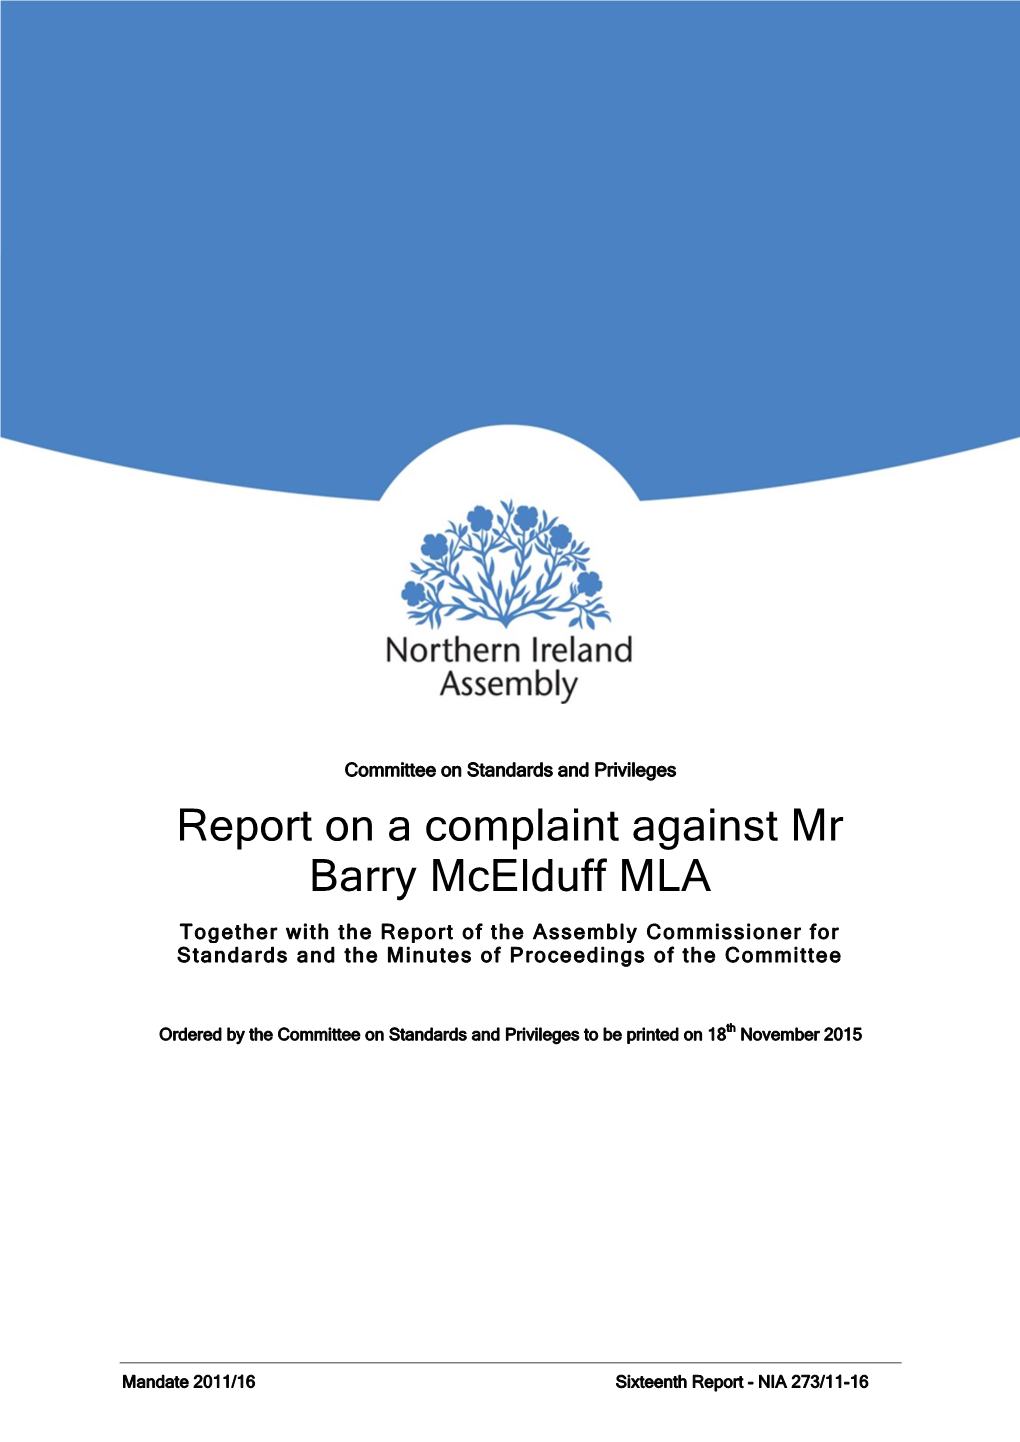 Report on a Complaint Against Mr Barry Mcelduff MLA